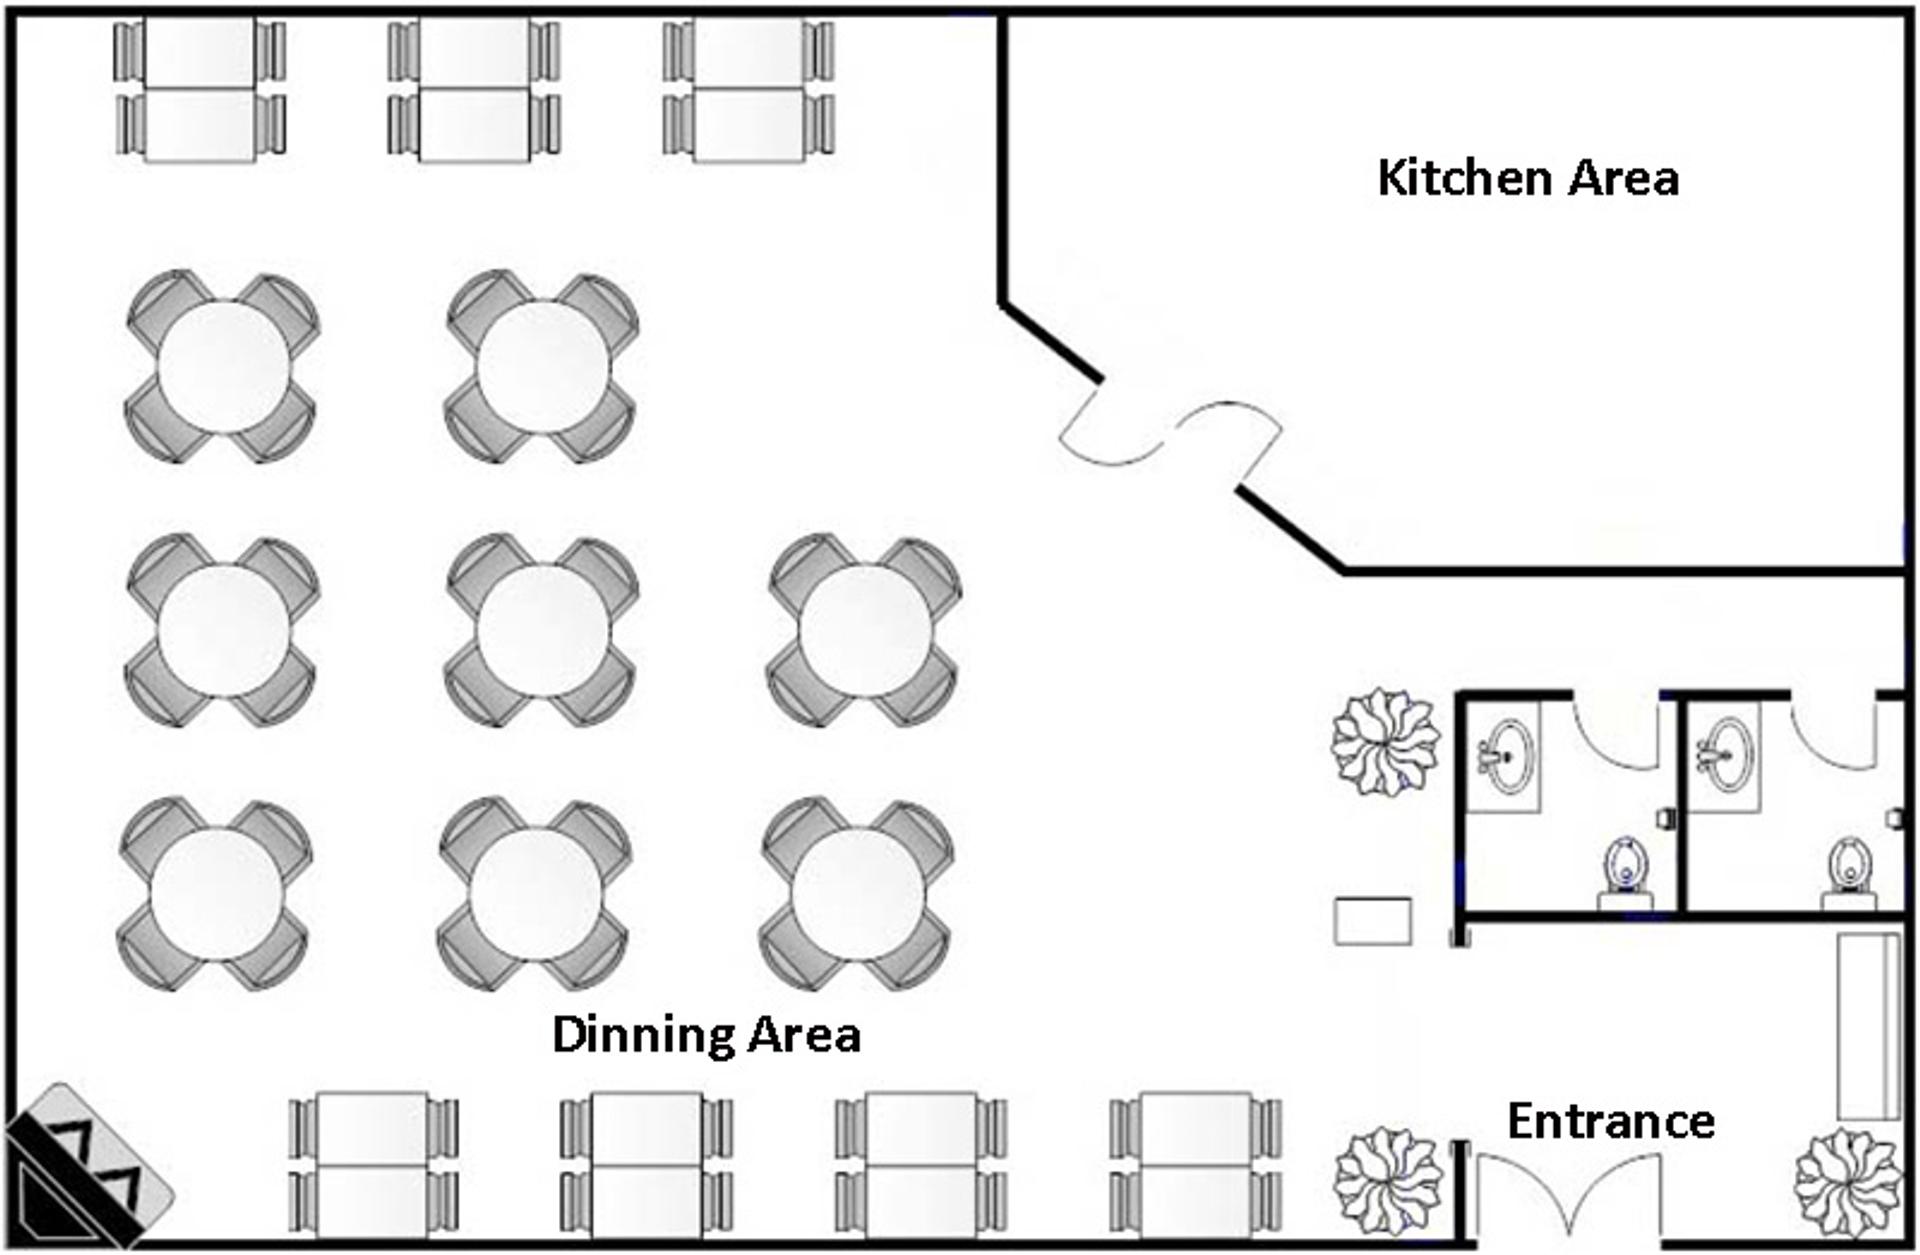 Floor plan for a small restaurant